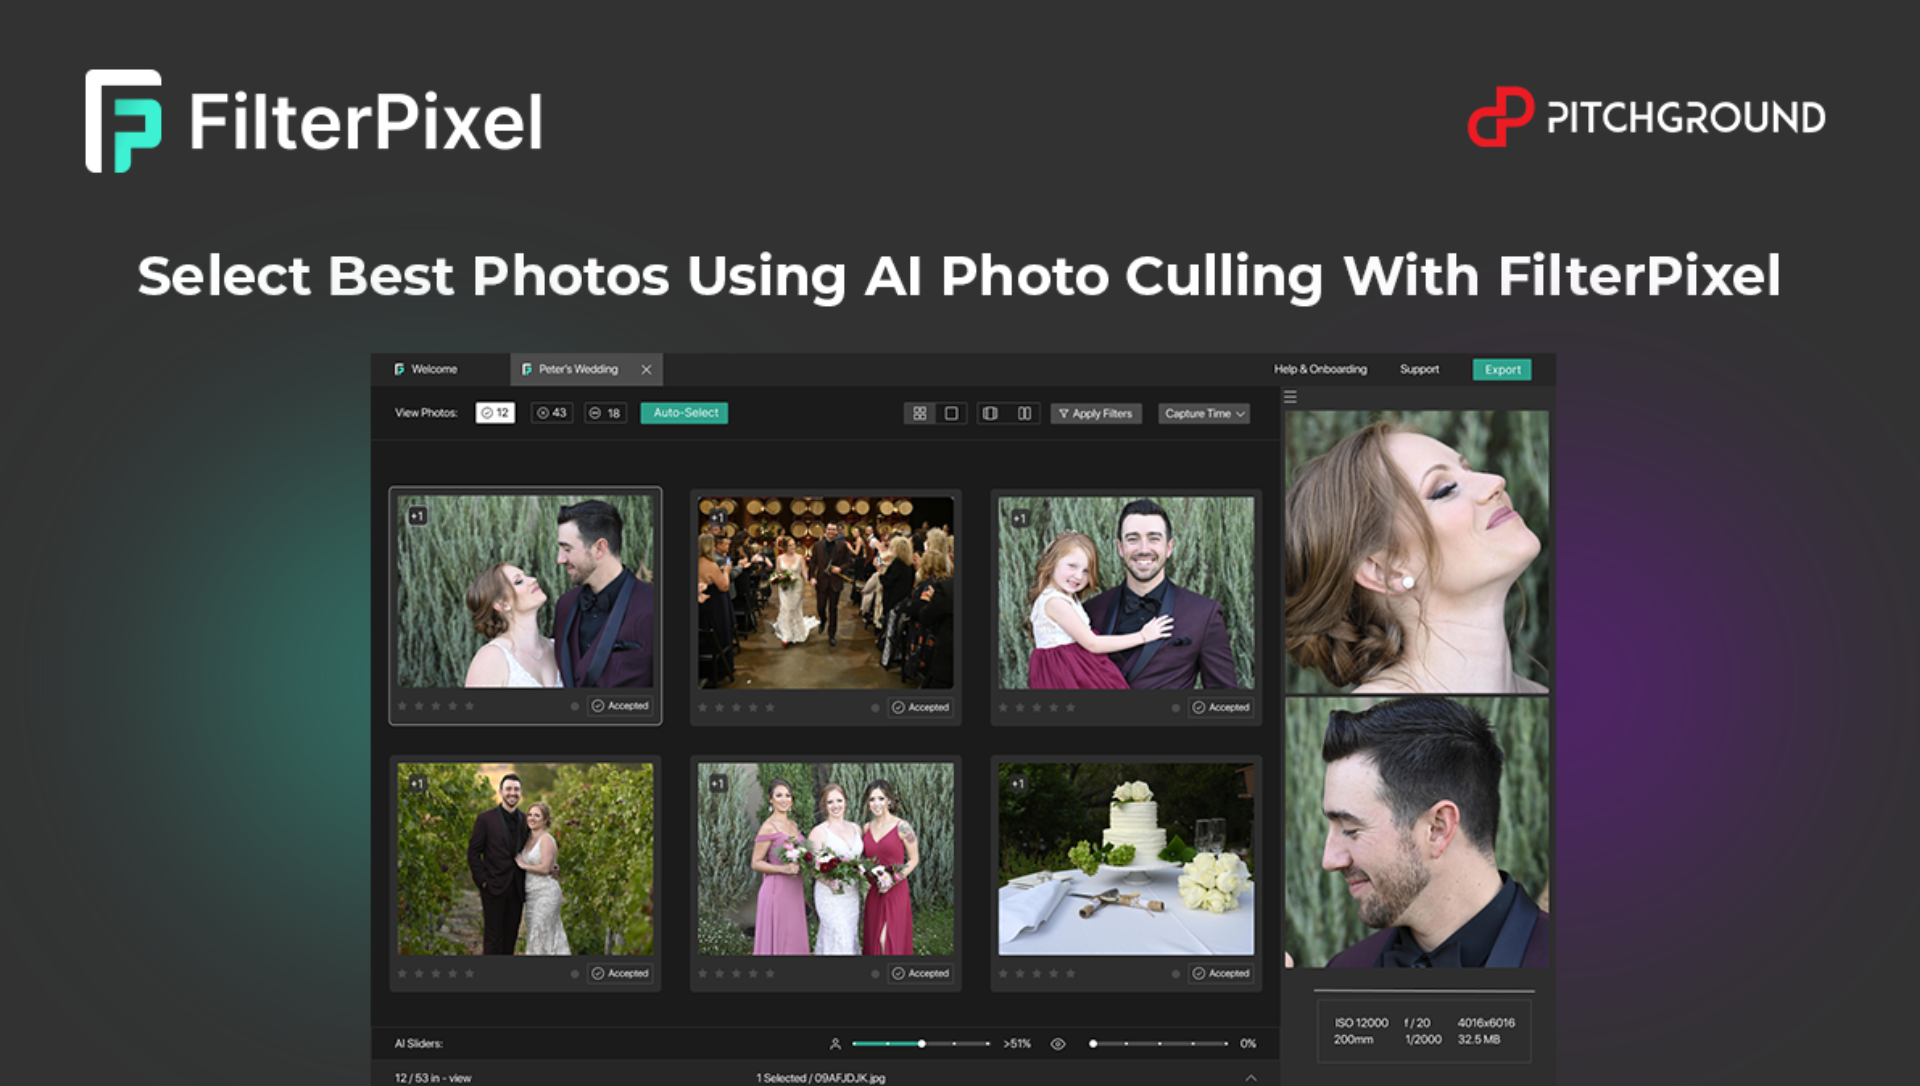 Lifetime Deal to FilterPixel: Plan A (3K Photo Limit) for $49